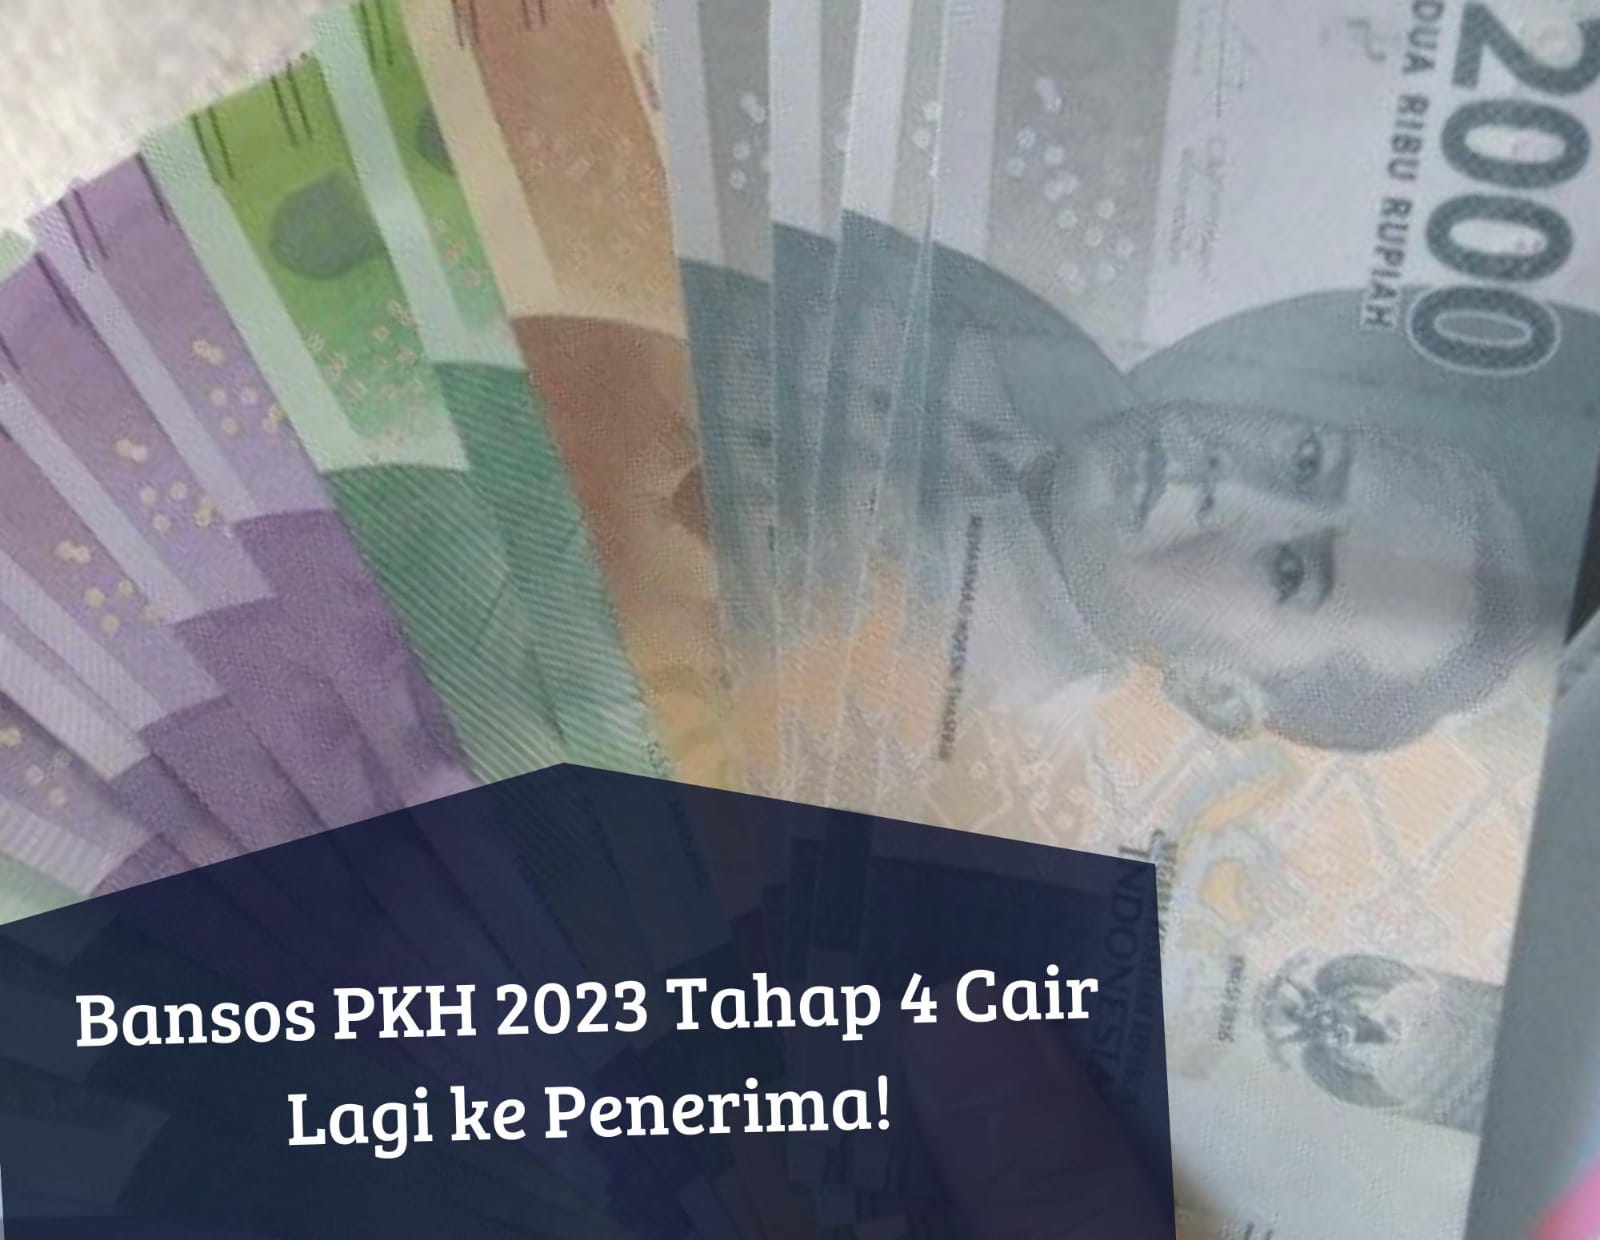 Masih Cair Bansos PKH 2023 Tahap 4, KPM Auto Dapat Uang Bantuan November, Cek Segera Pencairannya!